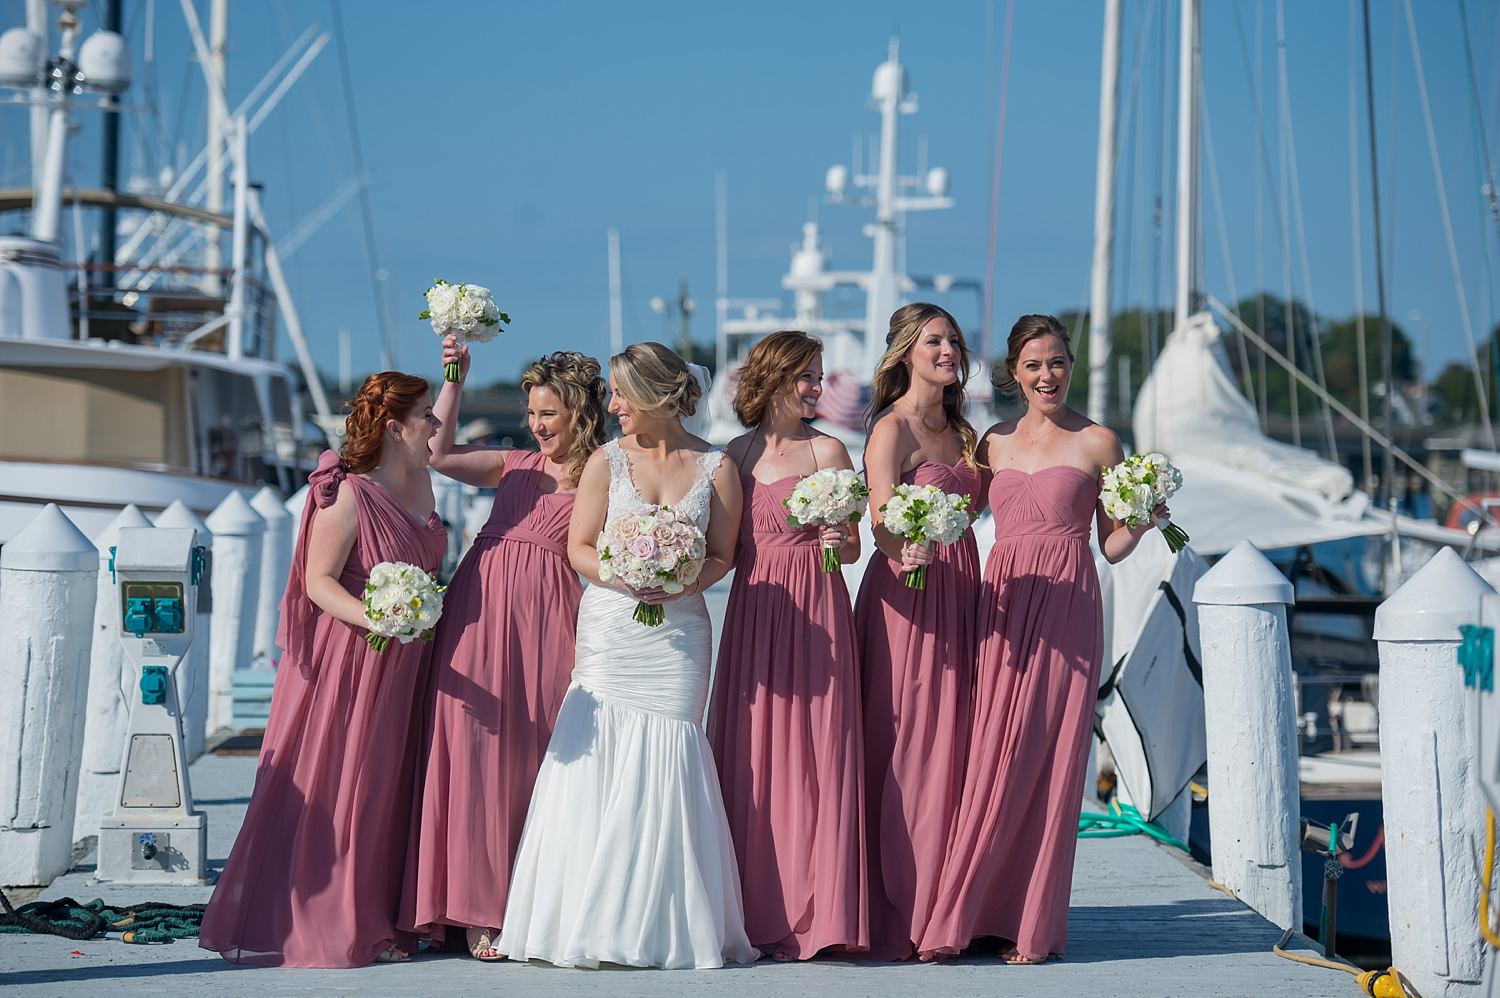 Nautical style wedding at Belle Mer in Newport, RI